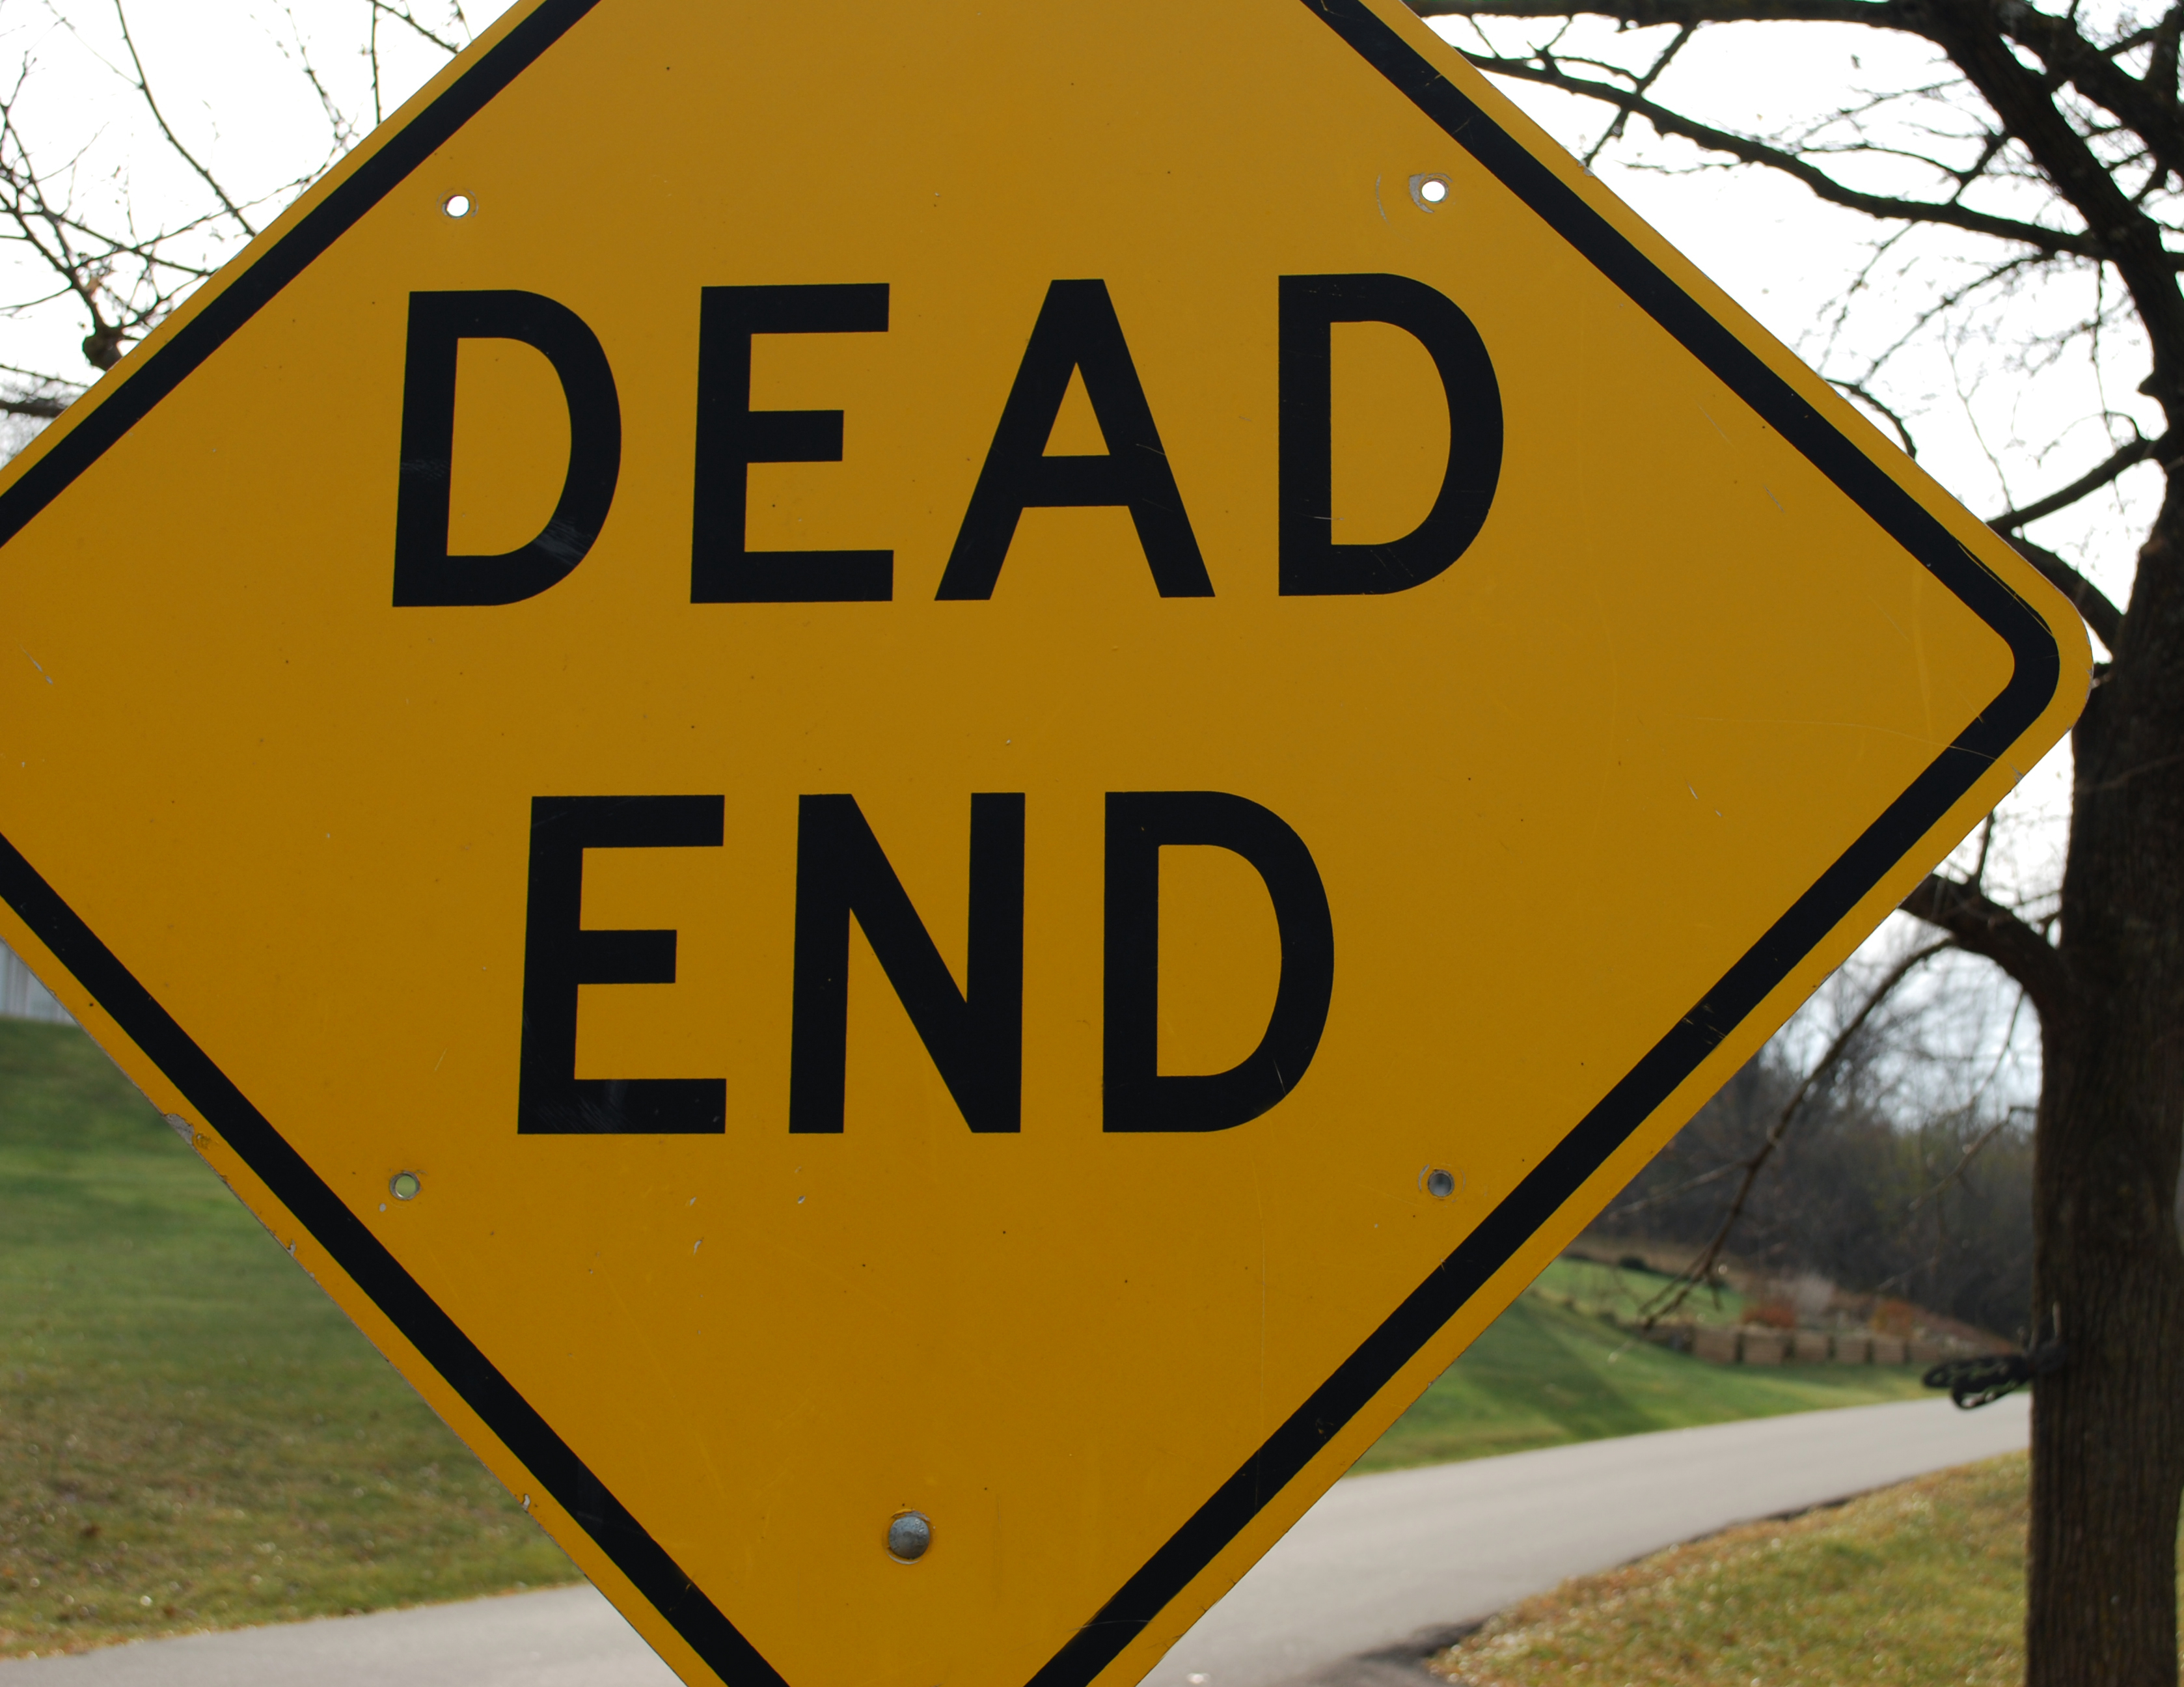 Stop my life. Dead end. Дорожный знак end. Better end. End sign.